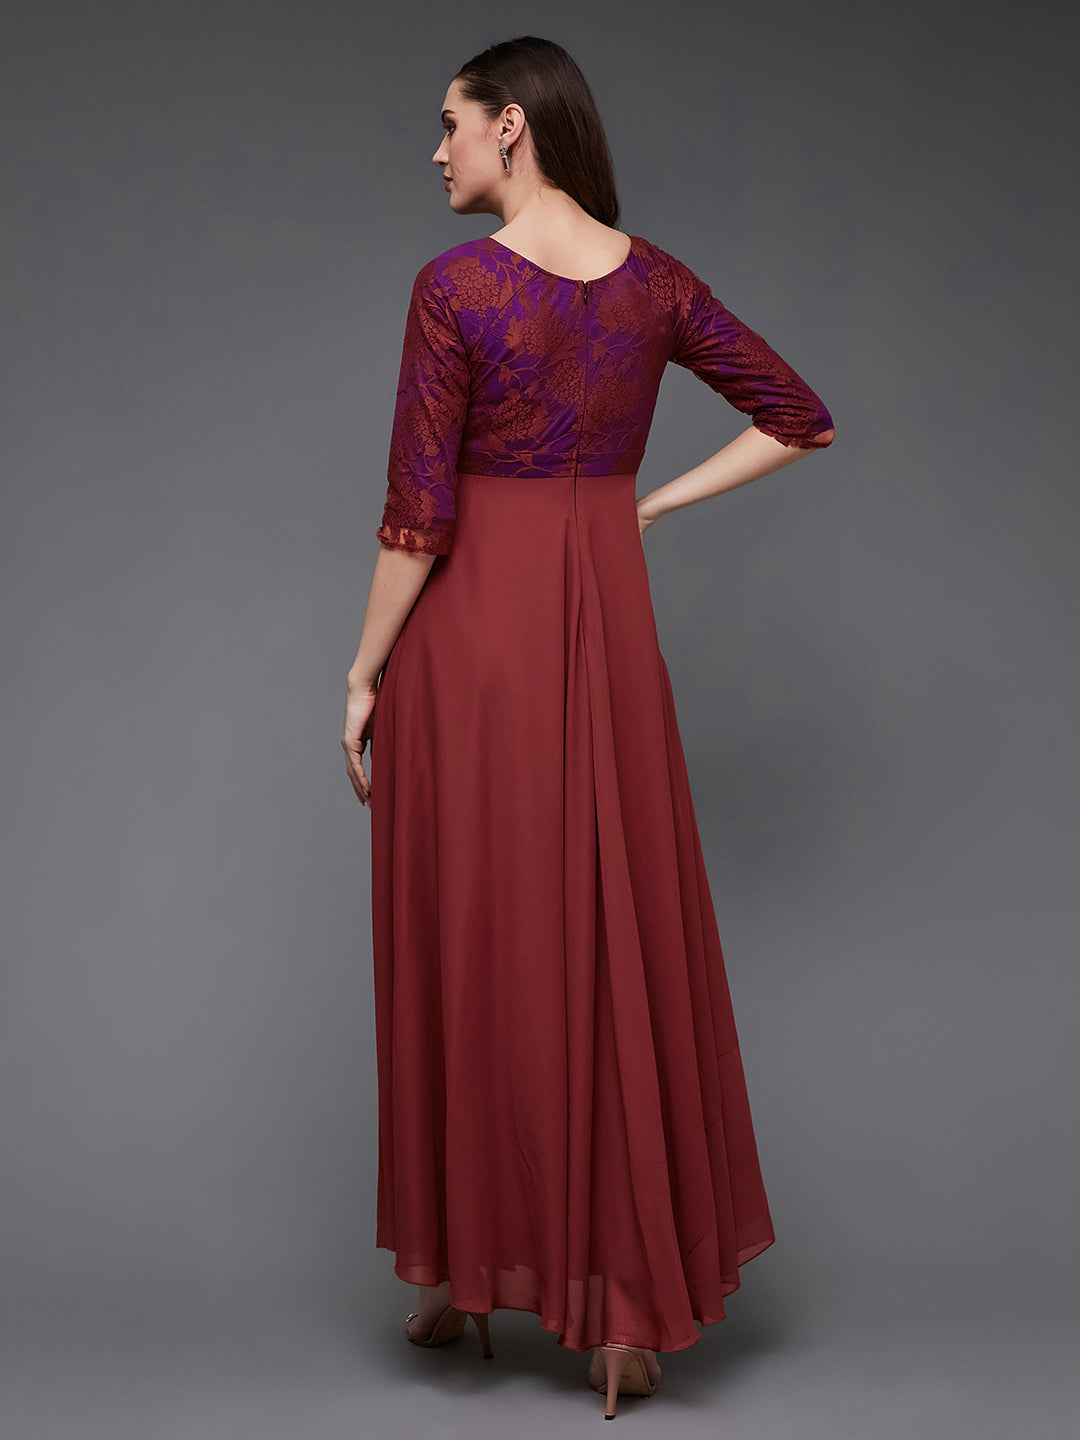 Women's Brick Red Sweet heart neck 3/4 Sleeve Self Design Fit & Flare Maxi Dress